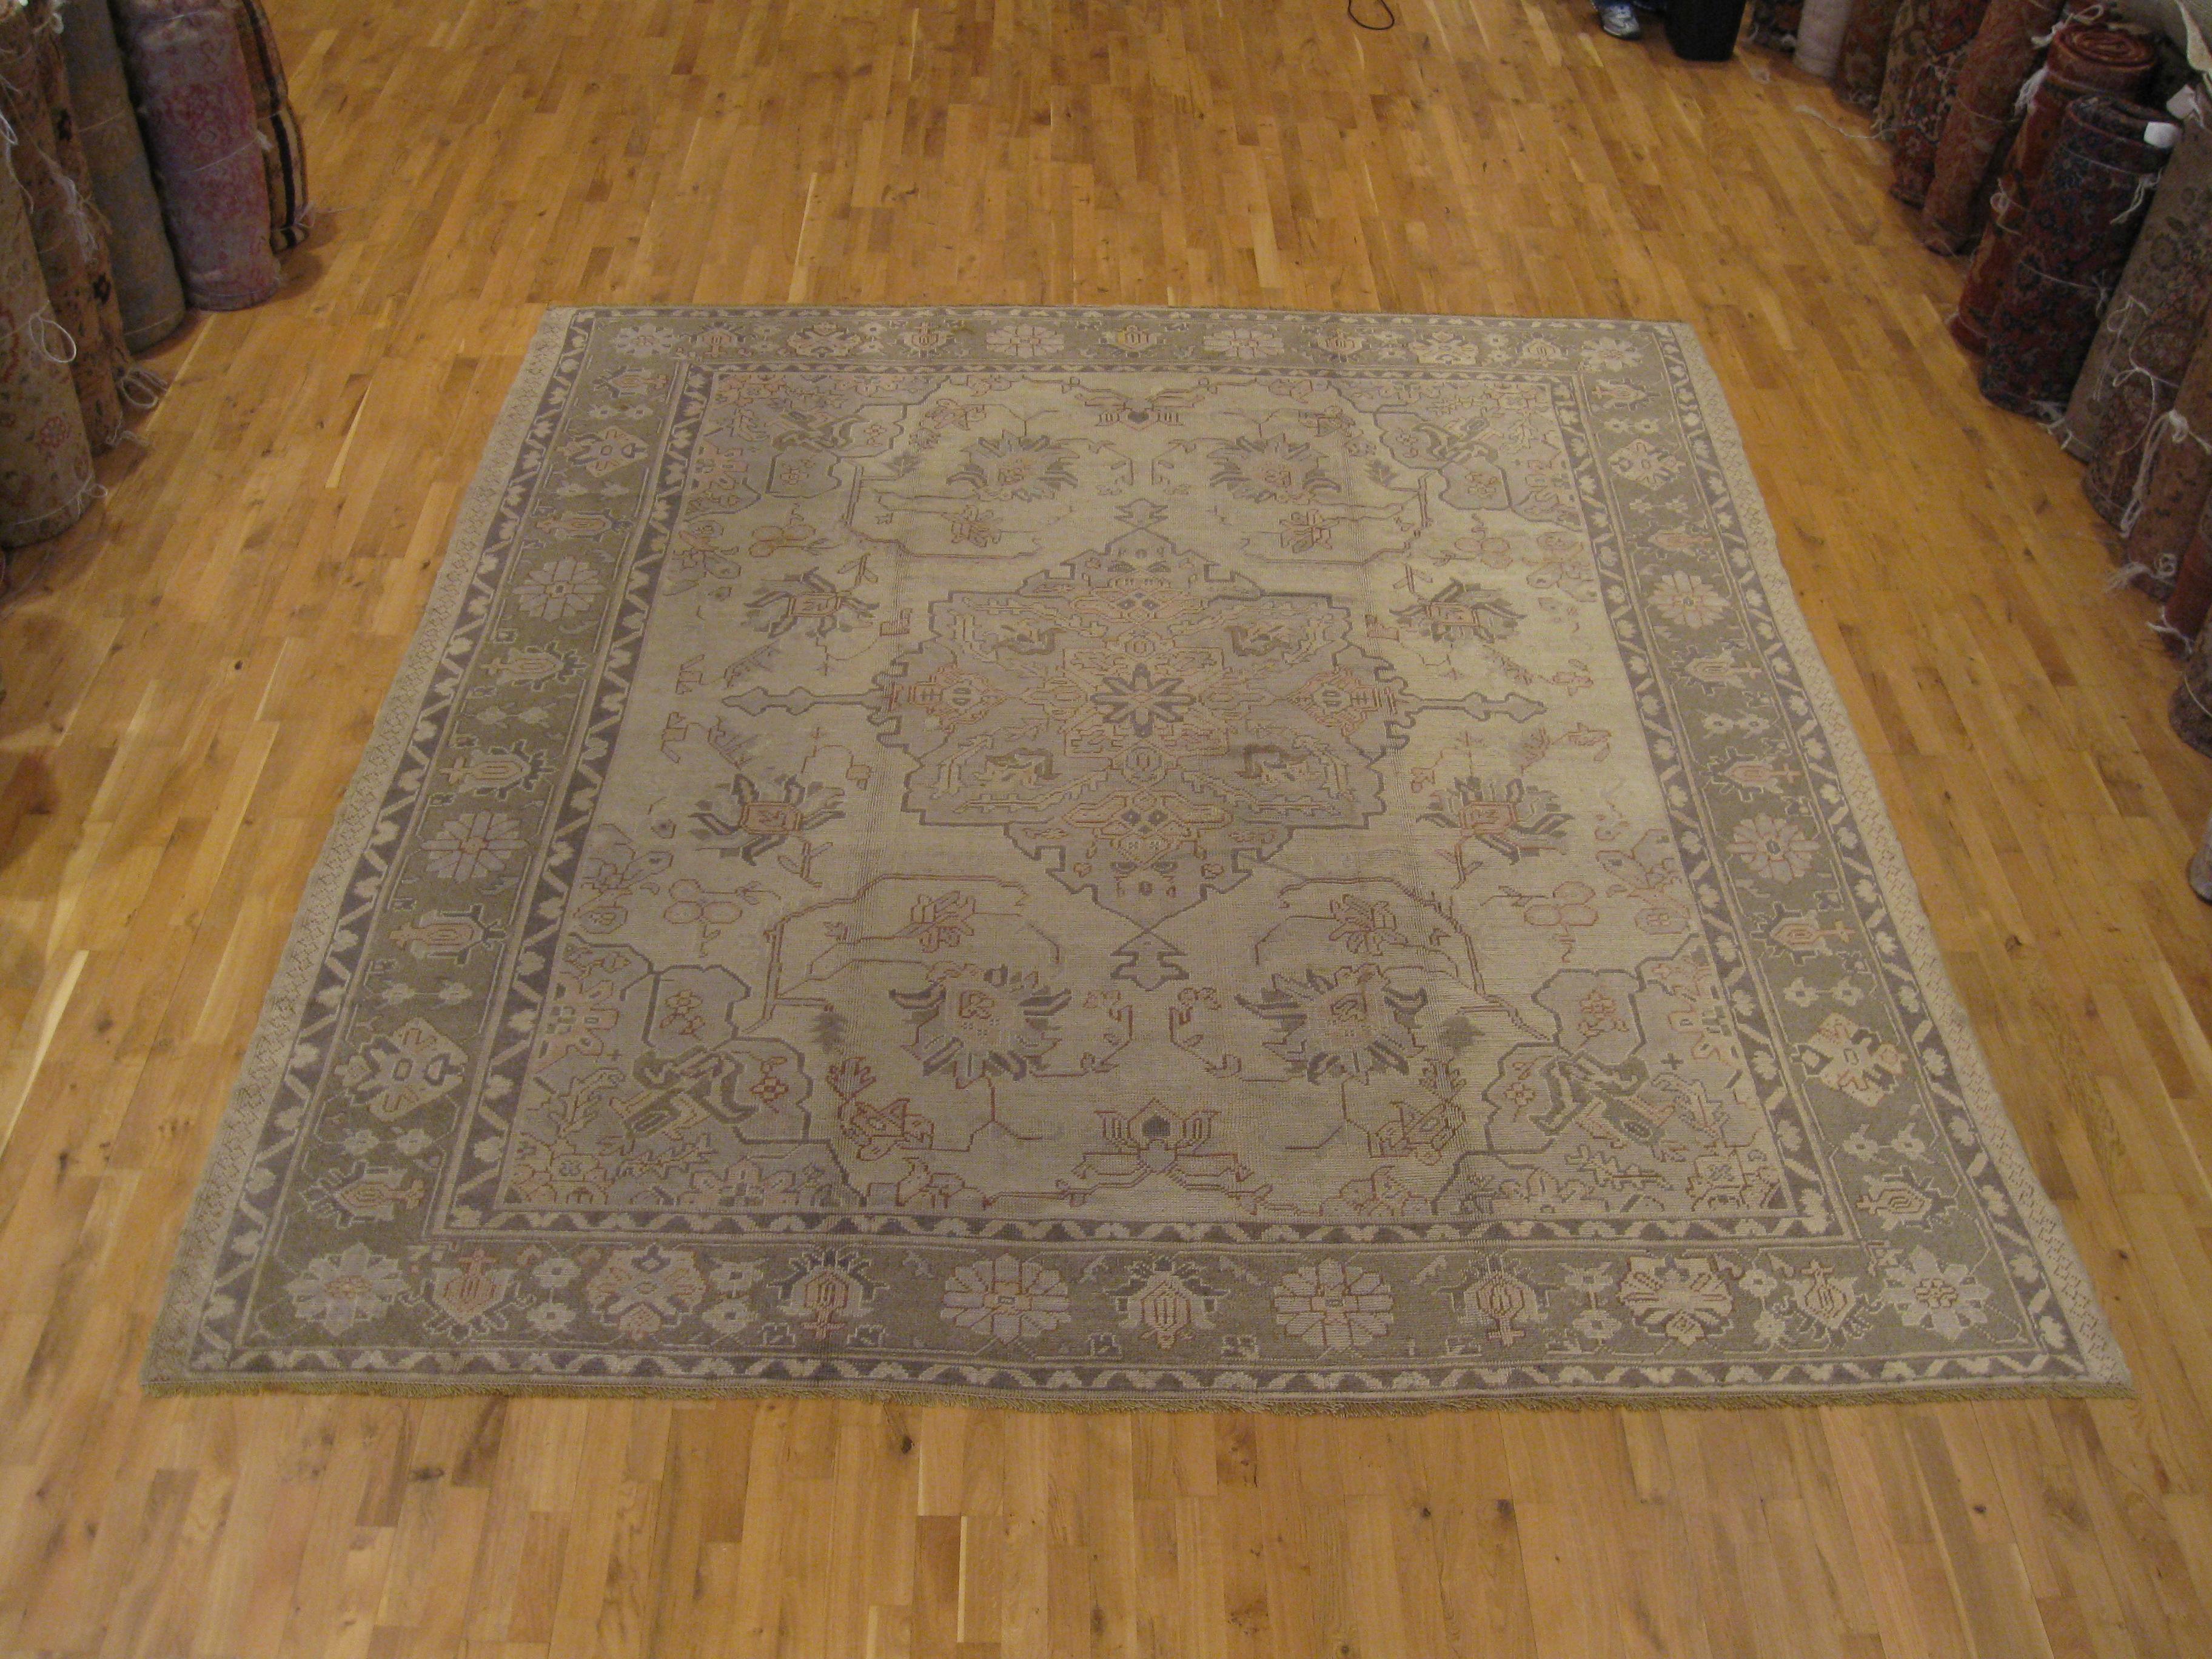 Antique Oushak rug

Measurement: 10'4